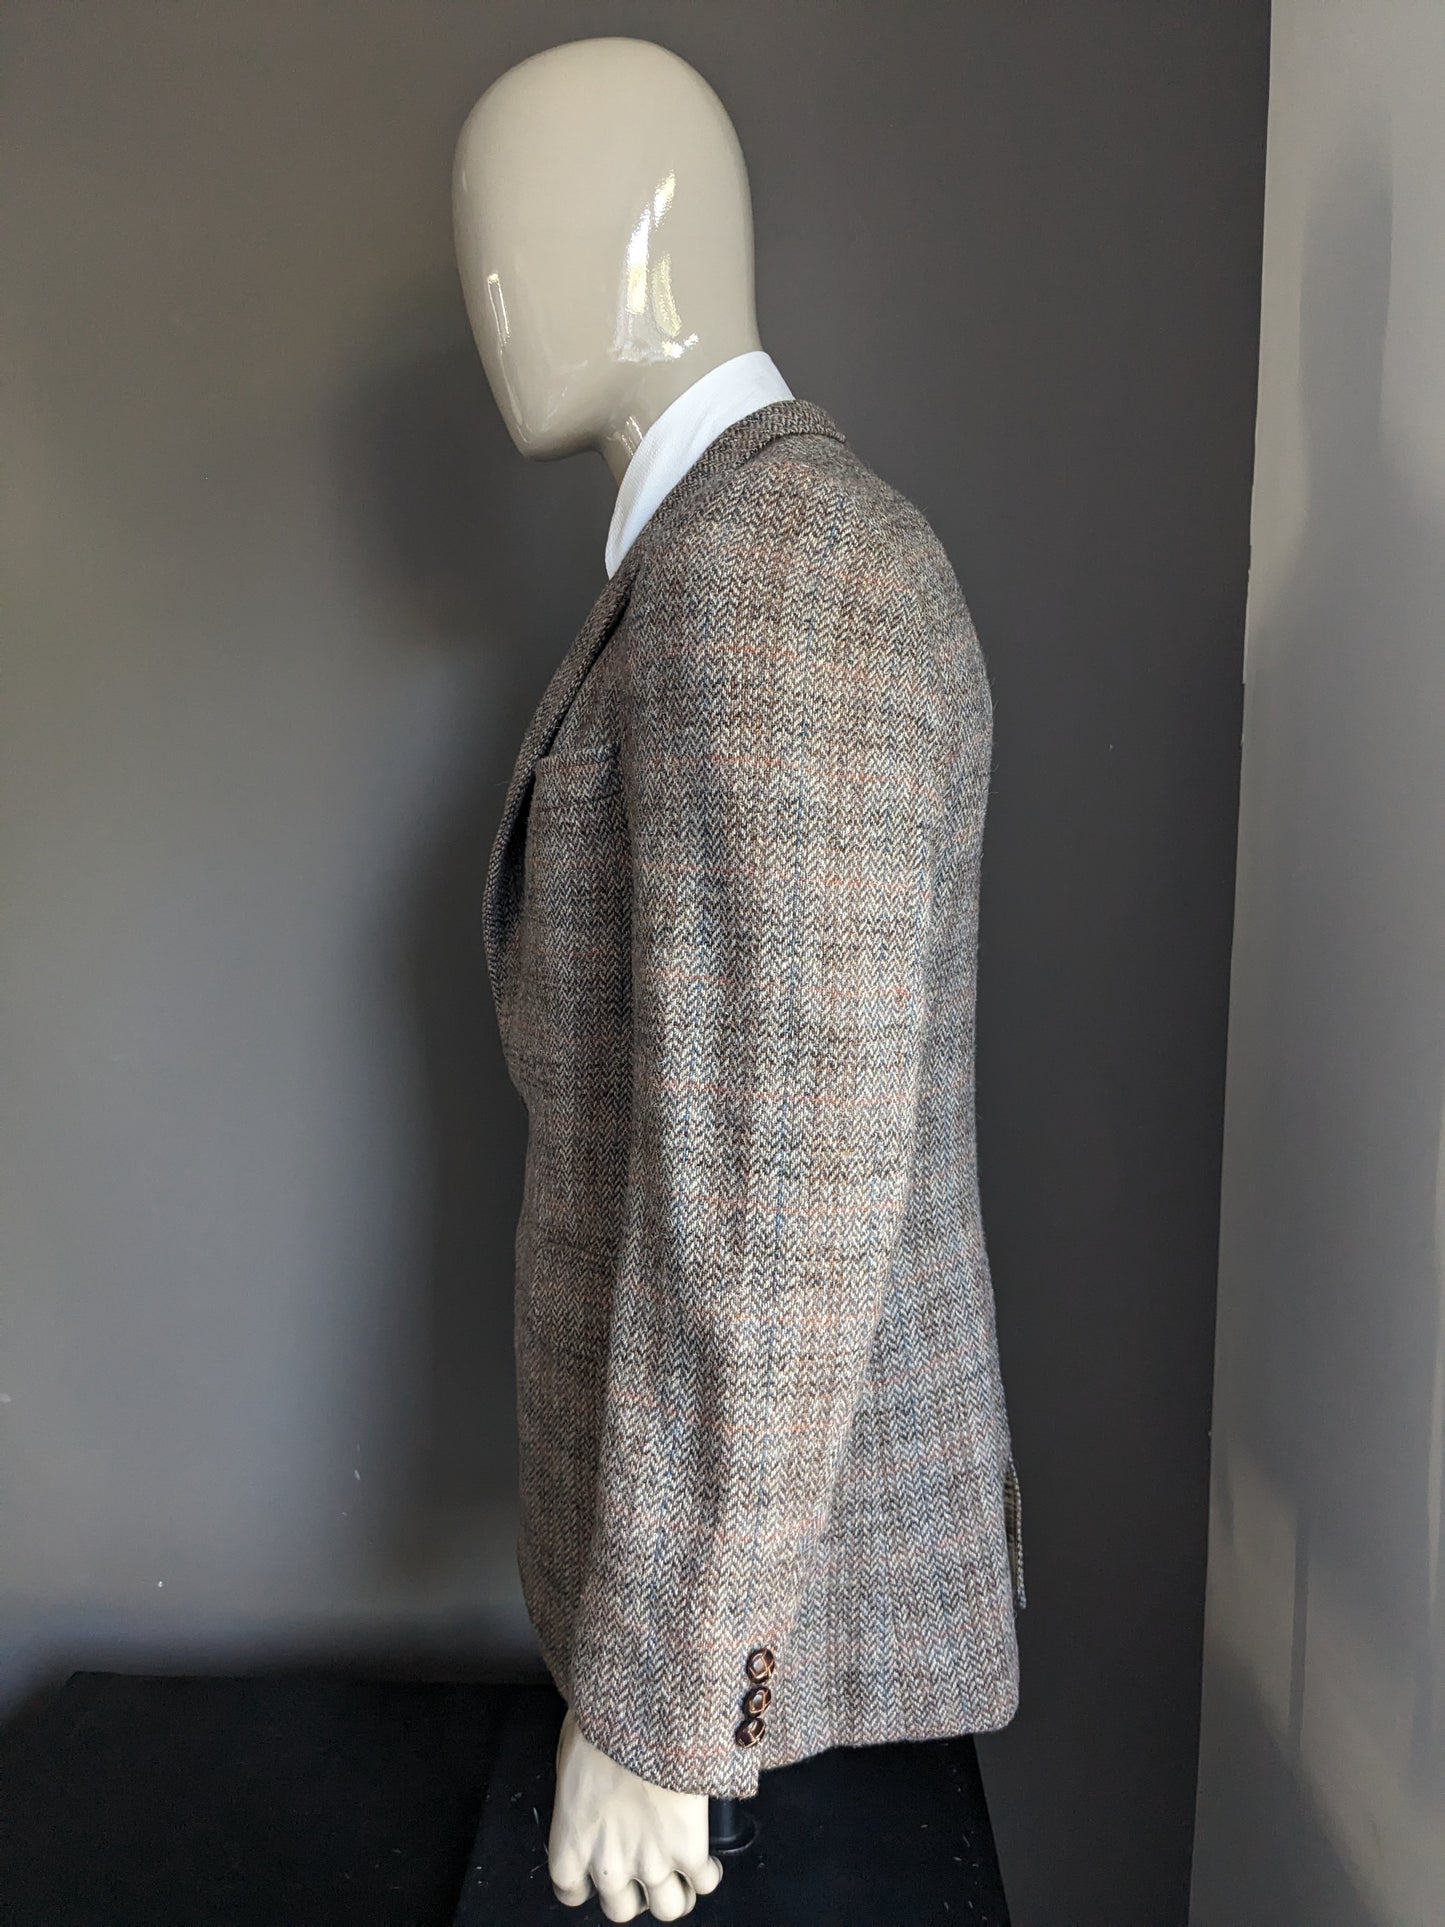 Pendleton woolen jacket. Brown herringbone motif with red blue stripe. Size 50 / M.